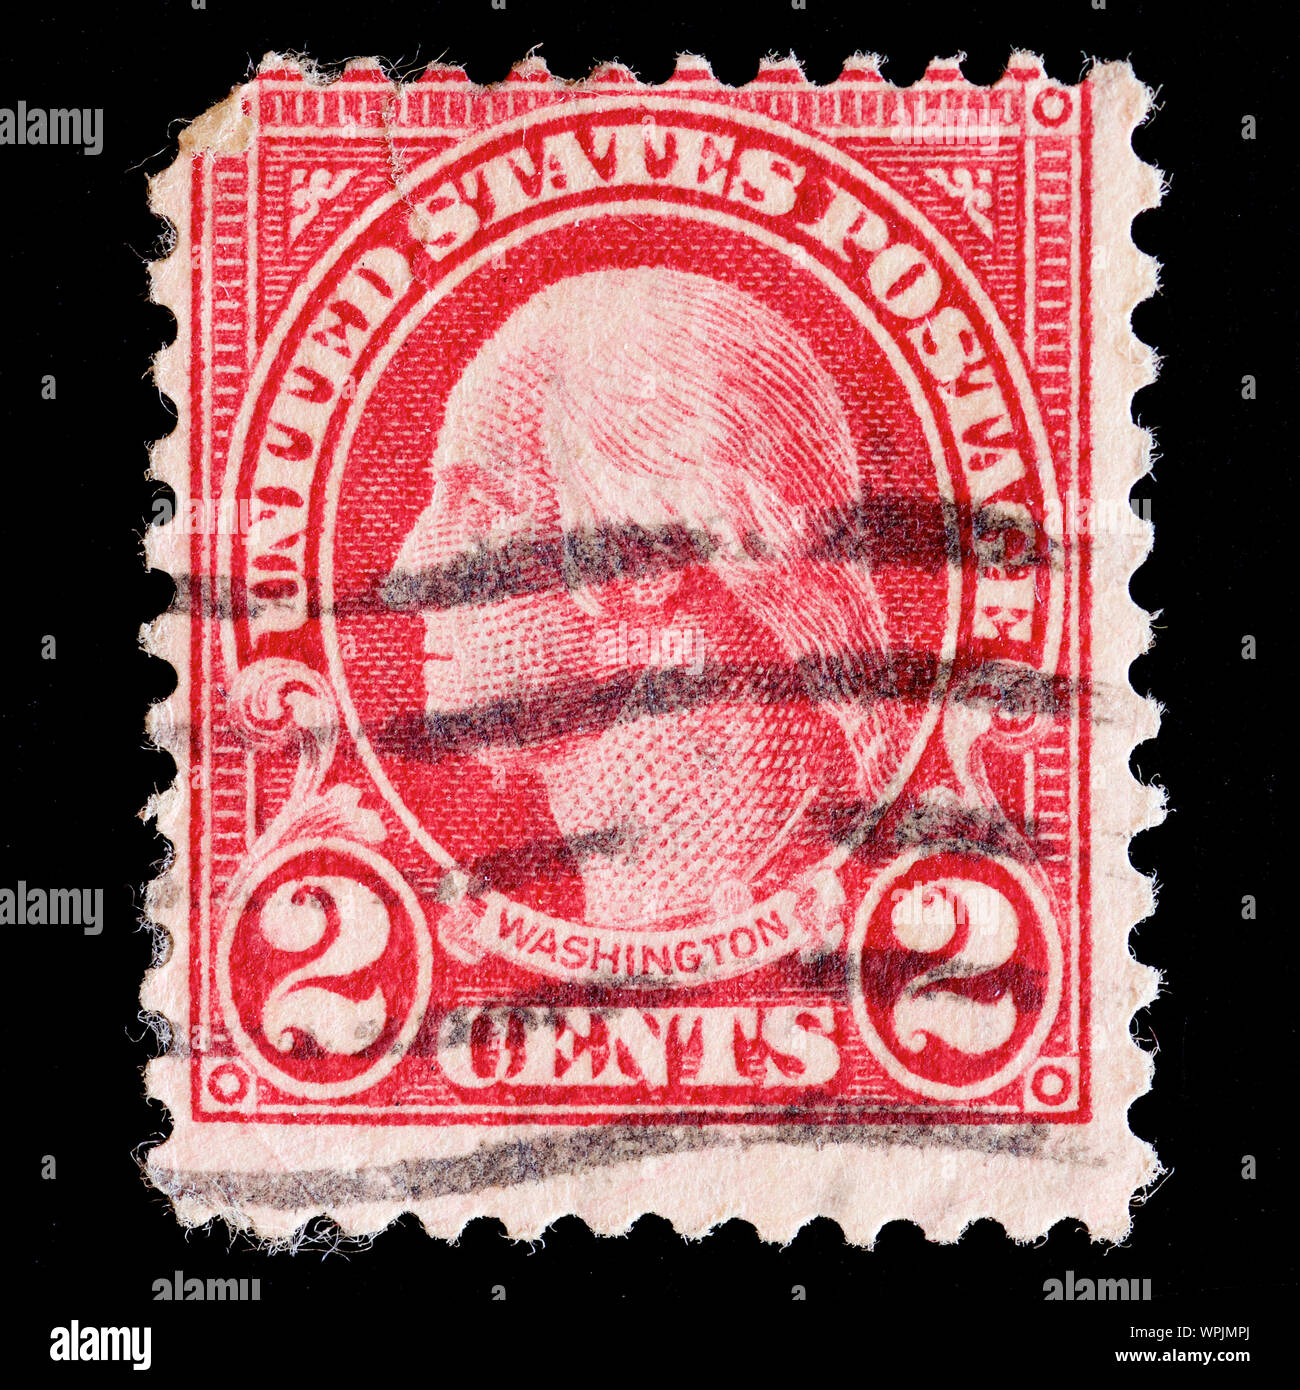 United States Postage Stamp - George Washington (1732-1799), premier président de l'USA Banque D'Images